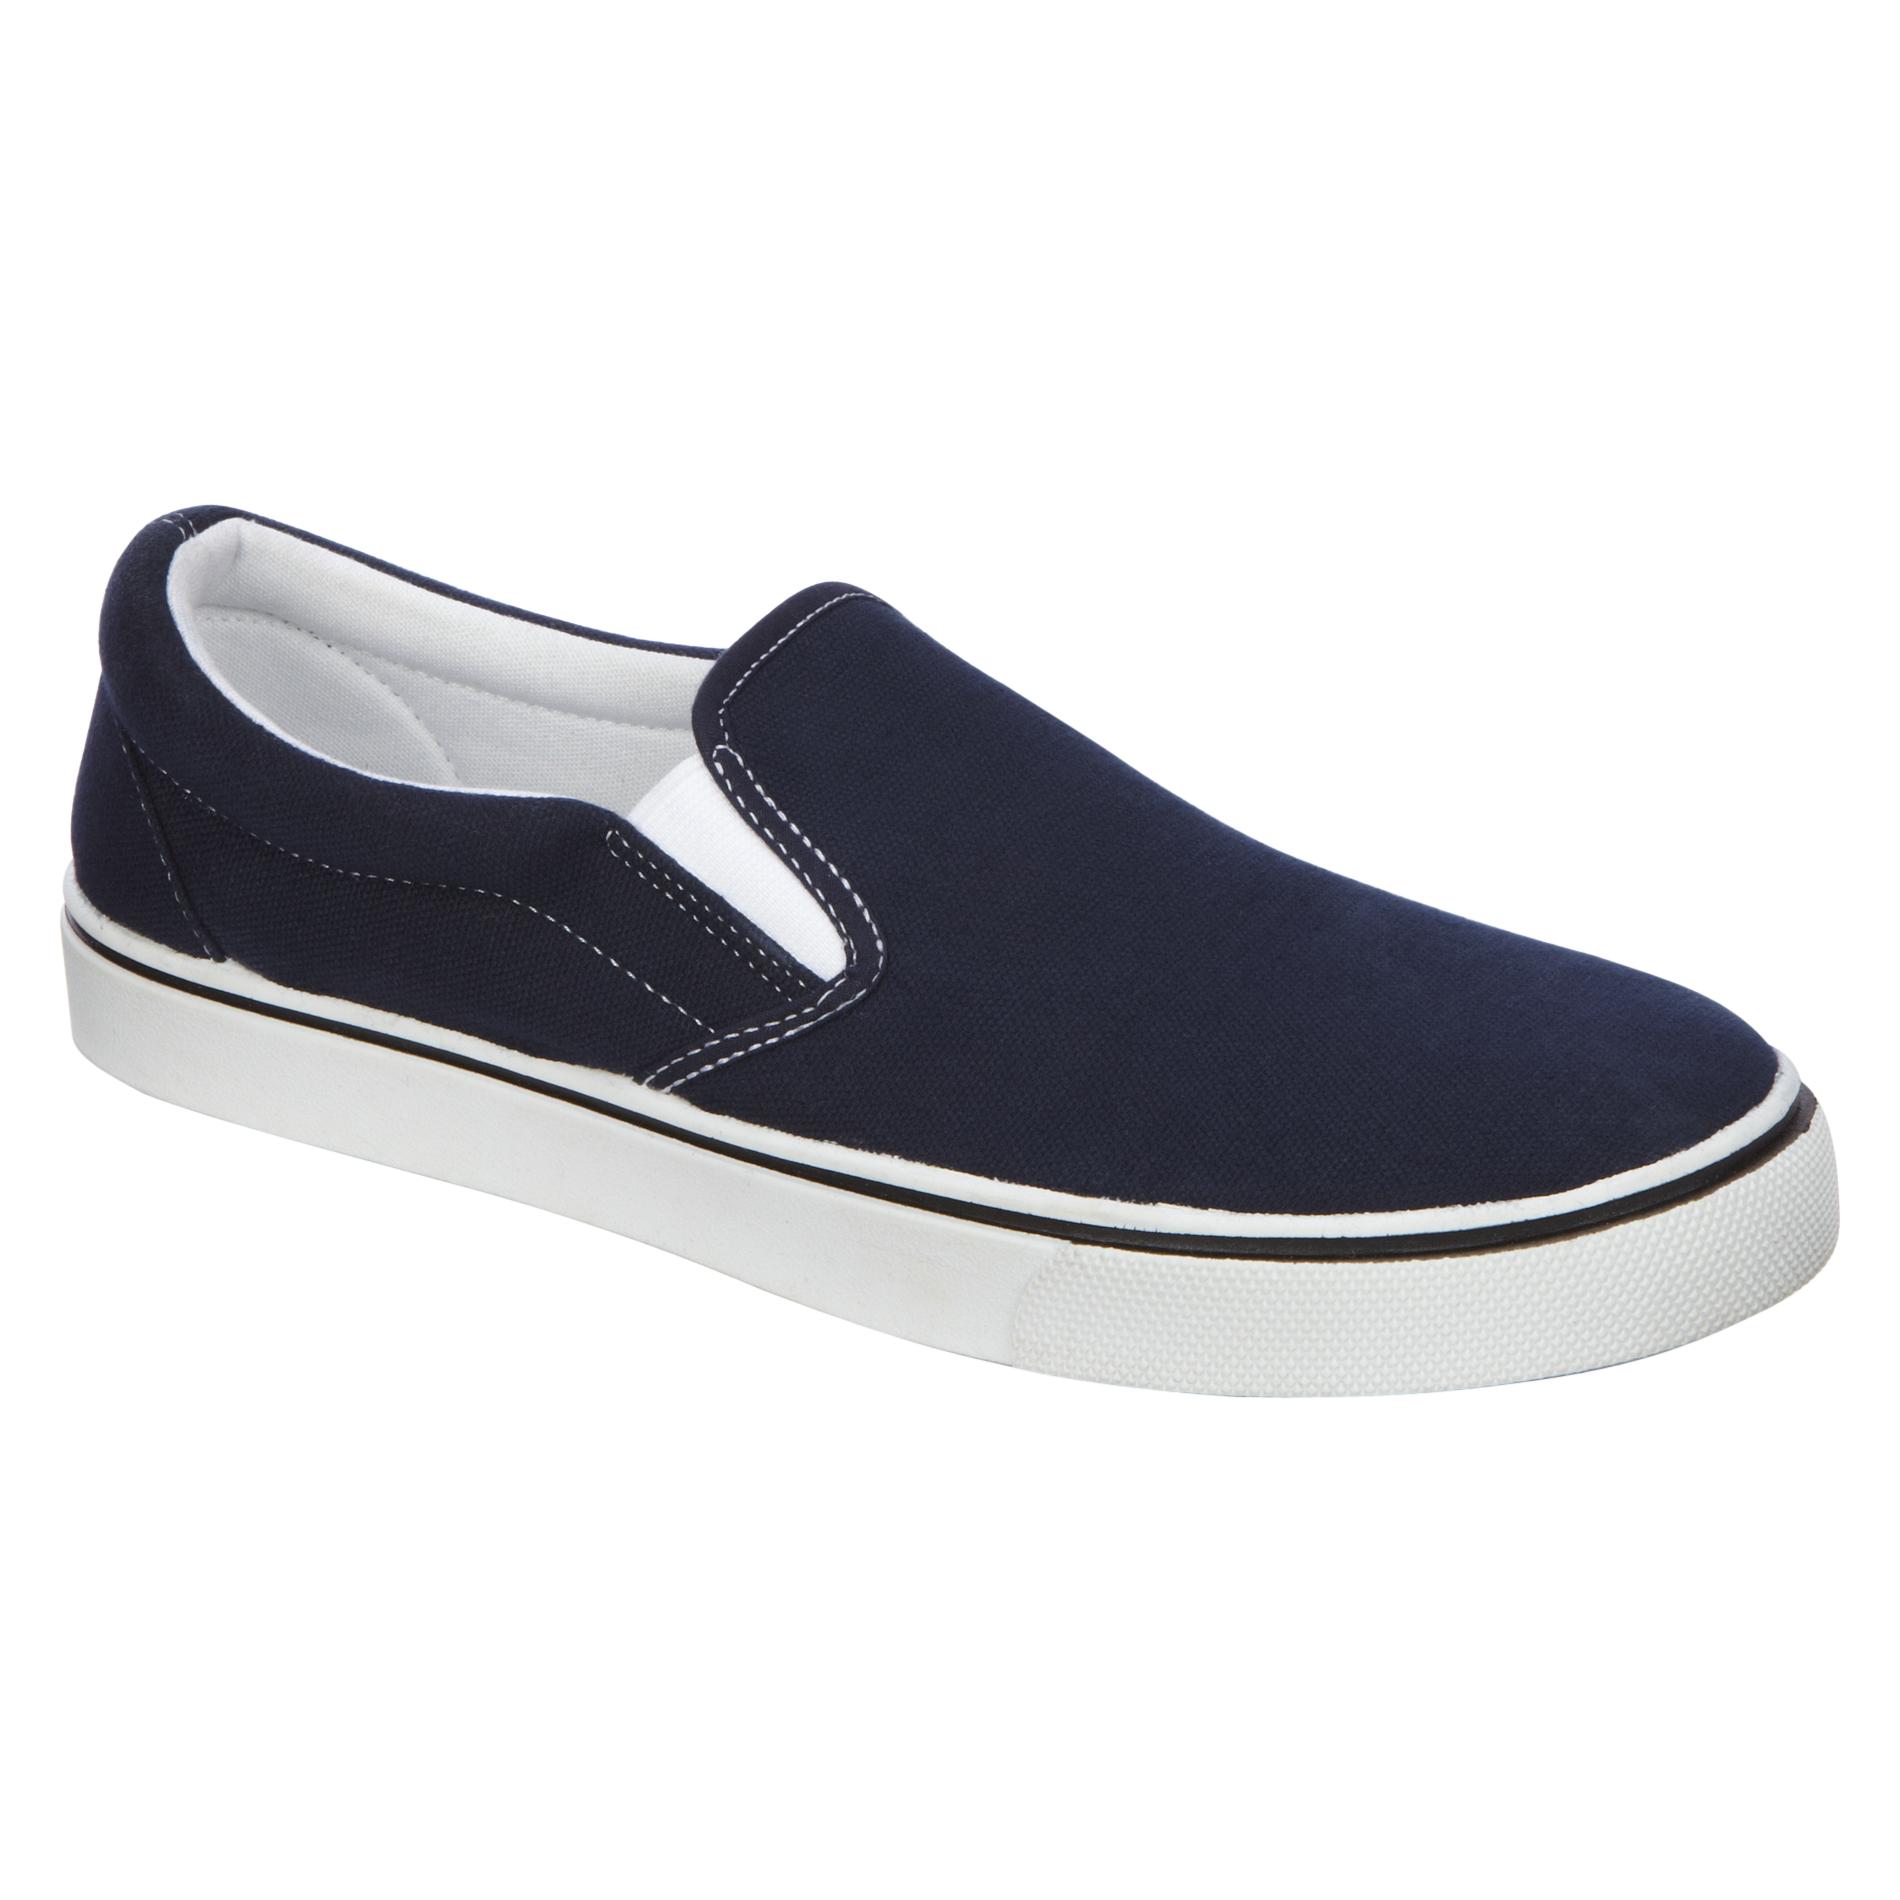 Men's Kaj Navy White Casual Shoe: Keep Your Style Classic at Kmart